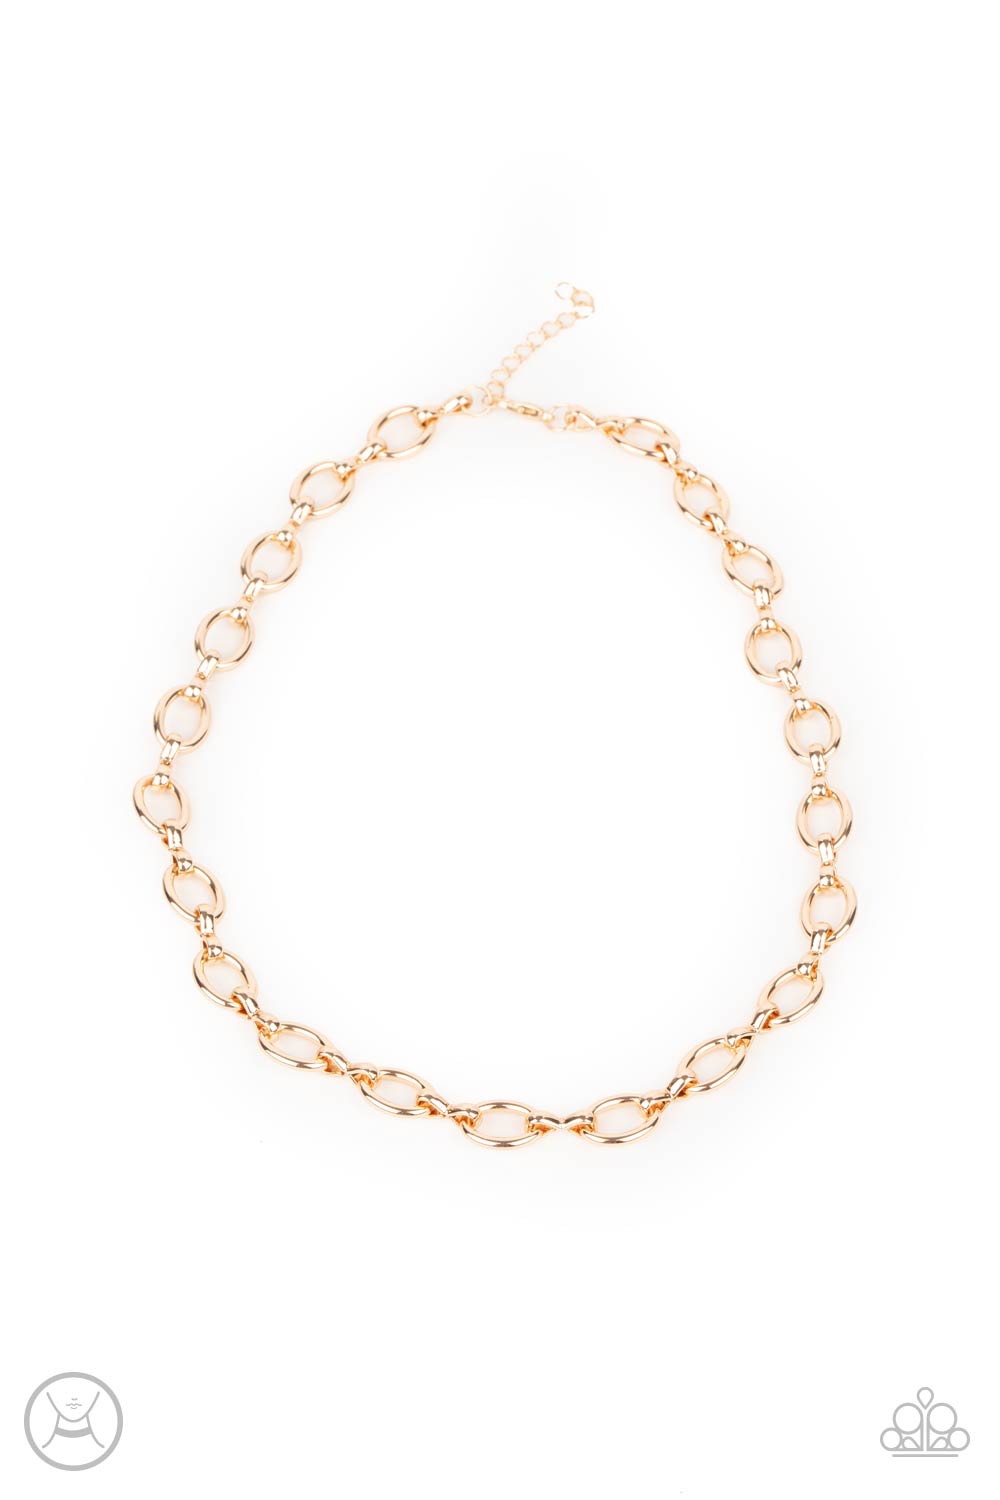 Craveable Couture - Paparazzi - Gold Link Choker Necklace